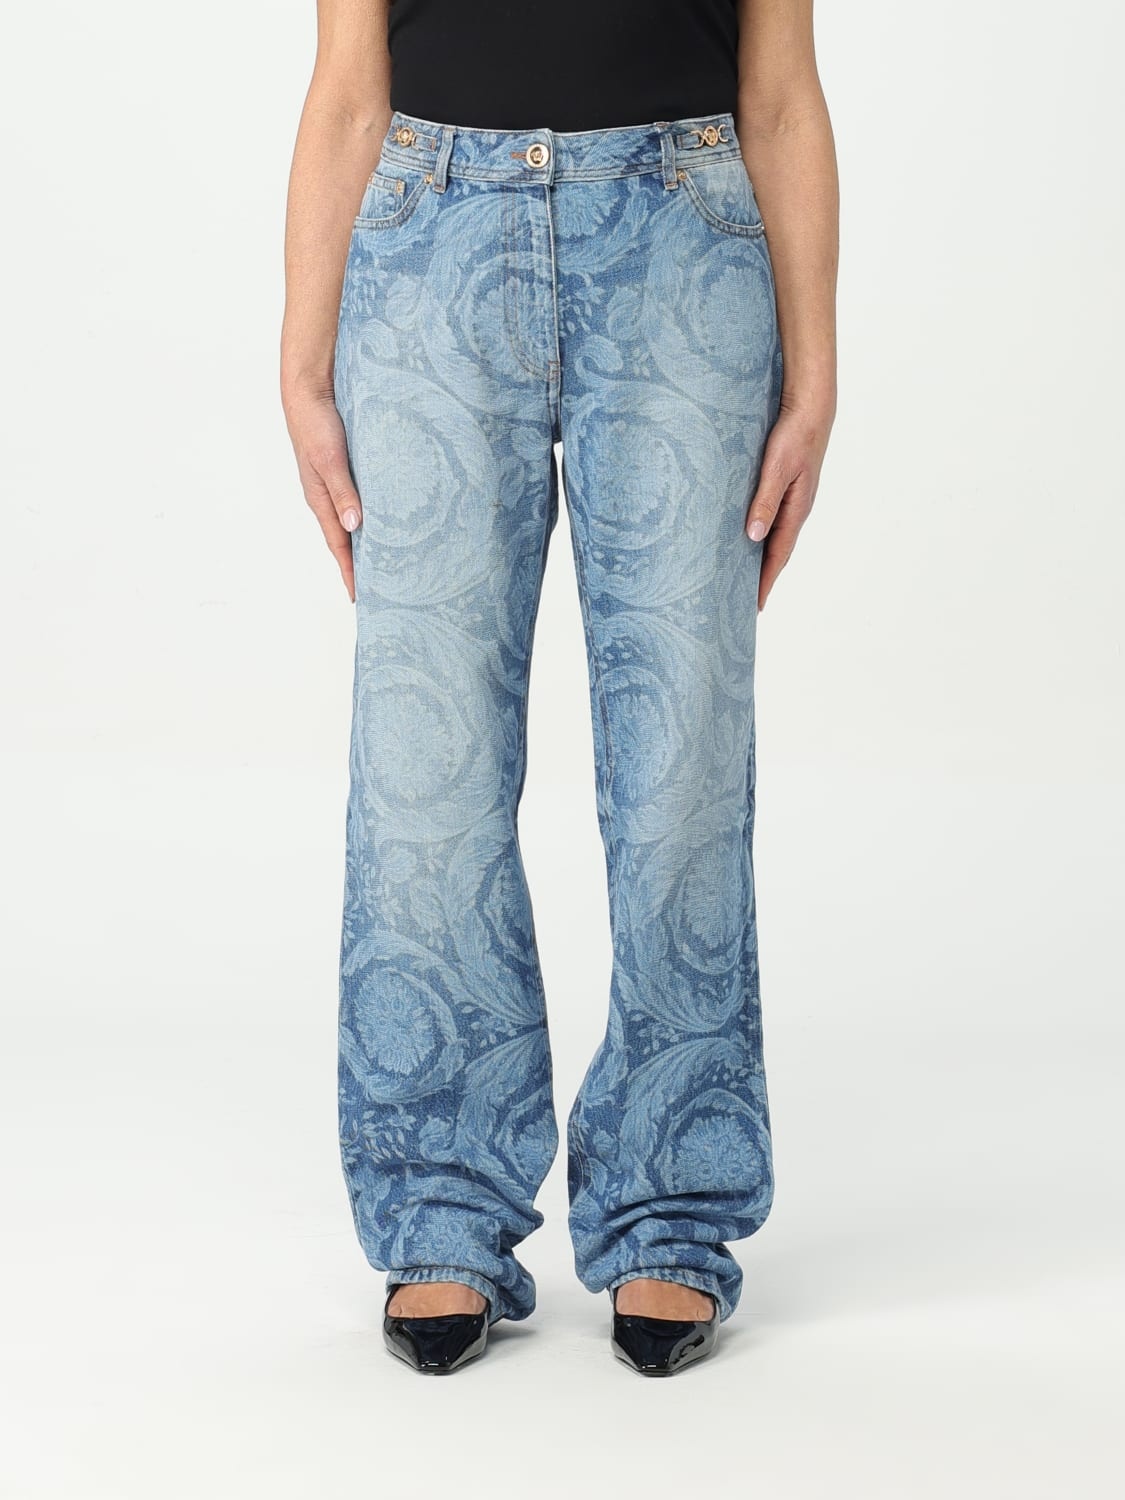 Jeans woman Versace - 1